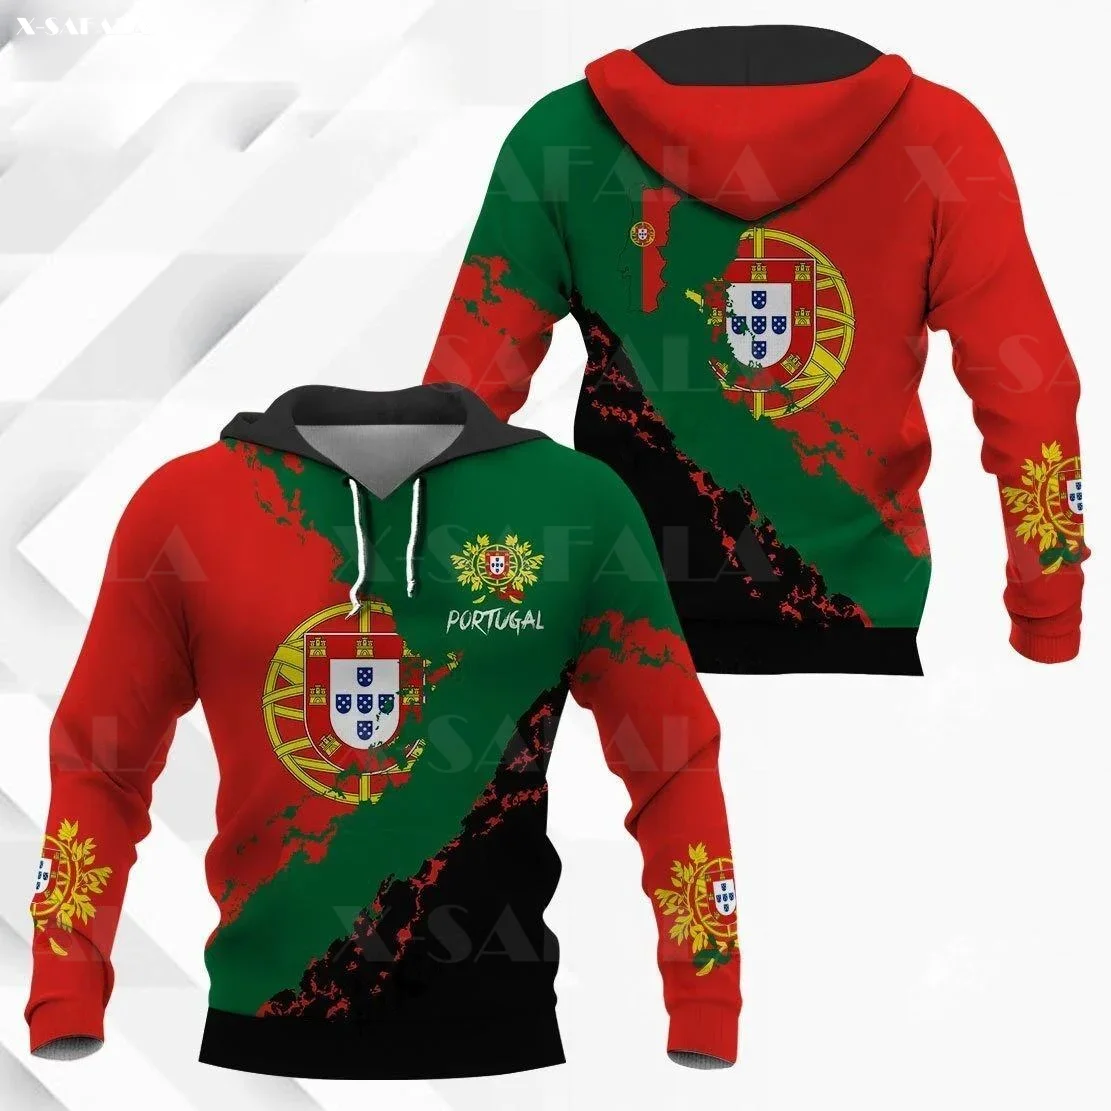 

PORTUGAL Emblem Map Flag 3D Print Zipper Hoodie Man Pullover Sweatshirt Hooded Jacket Jersey Tracksuits Outwear